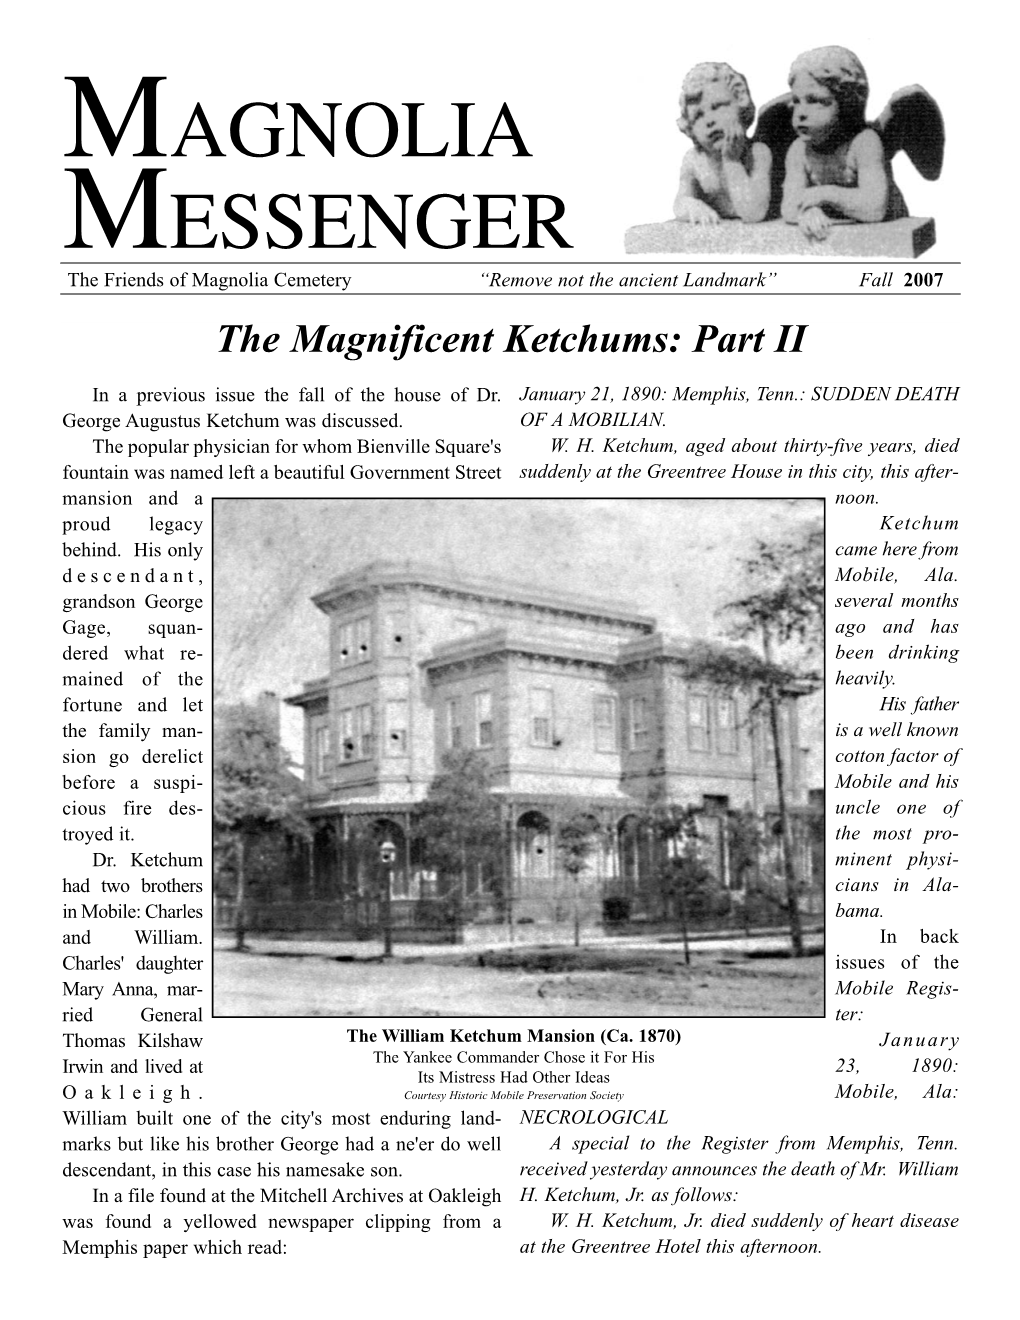 Messenger Magnolia